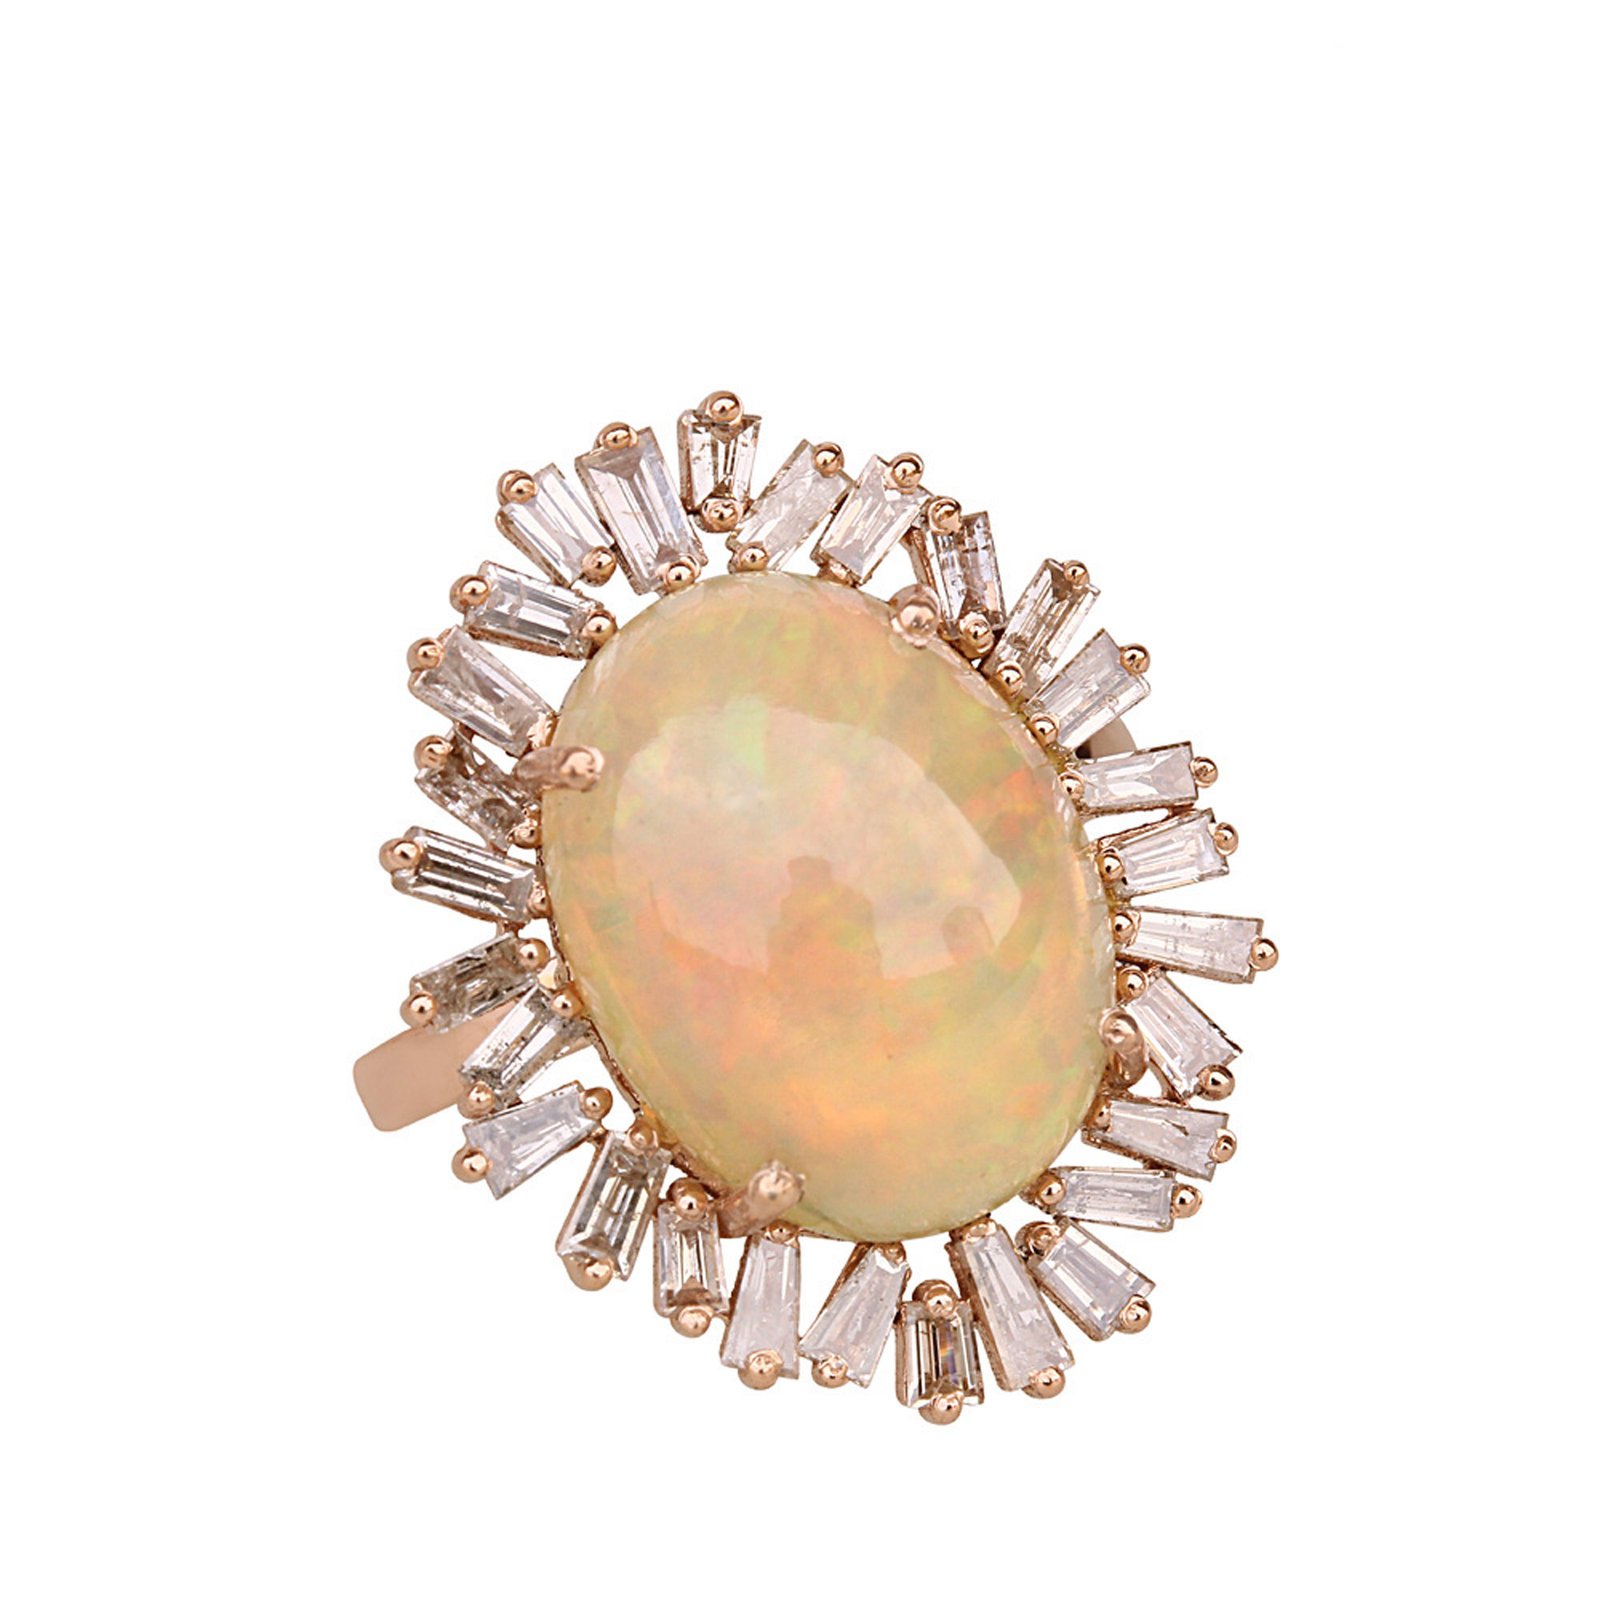 Real baguette diamond opal designer ring, 18k solid rose gold fine jewelry